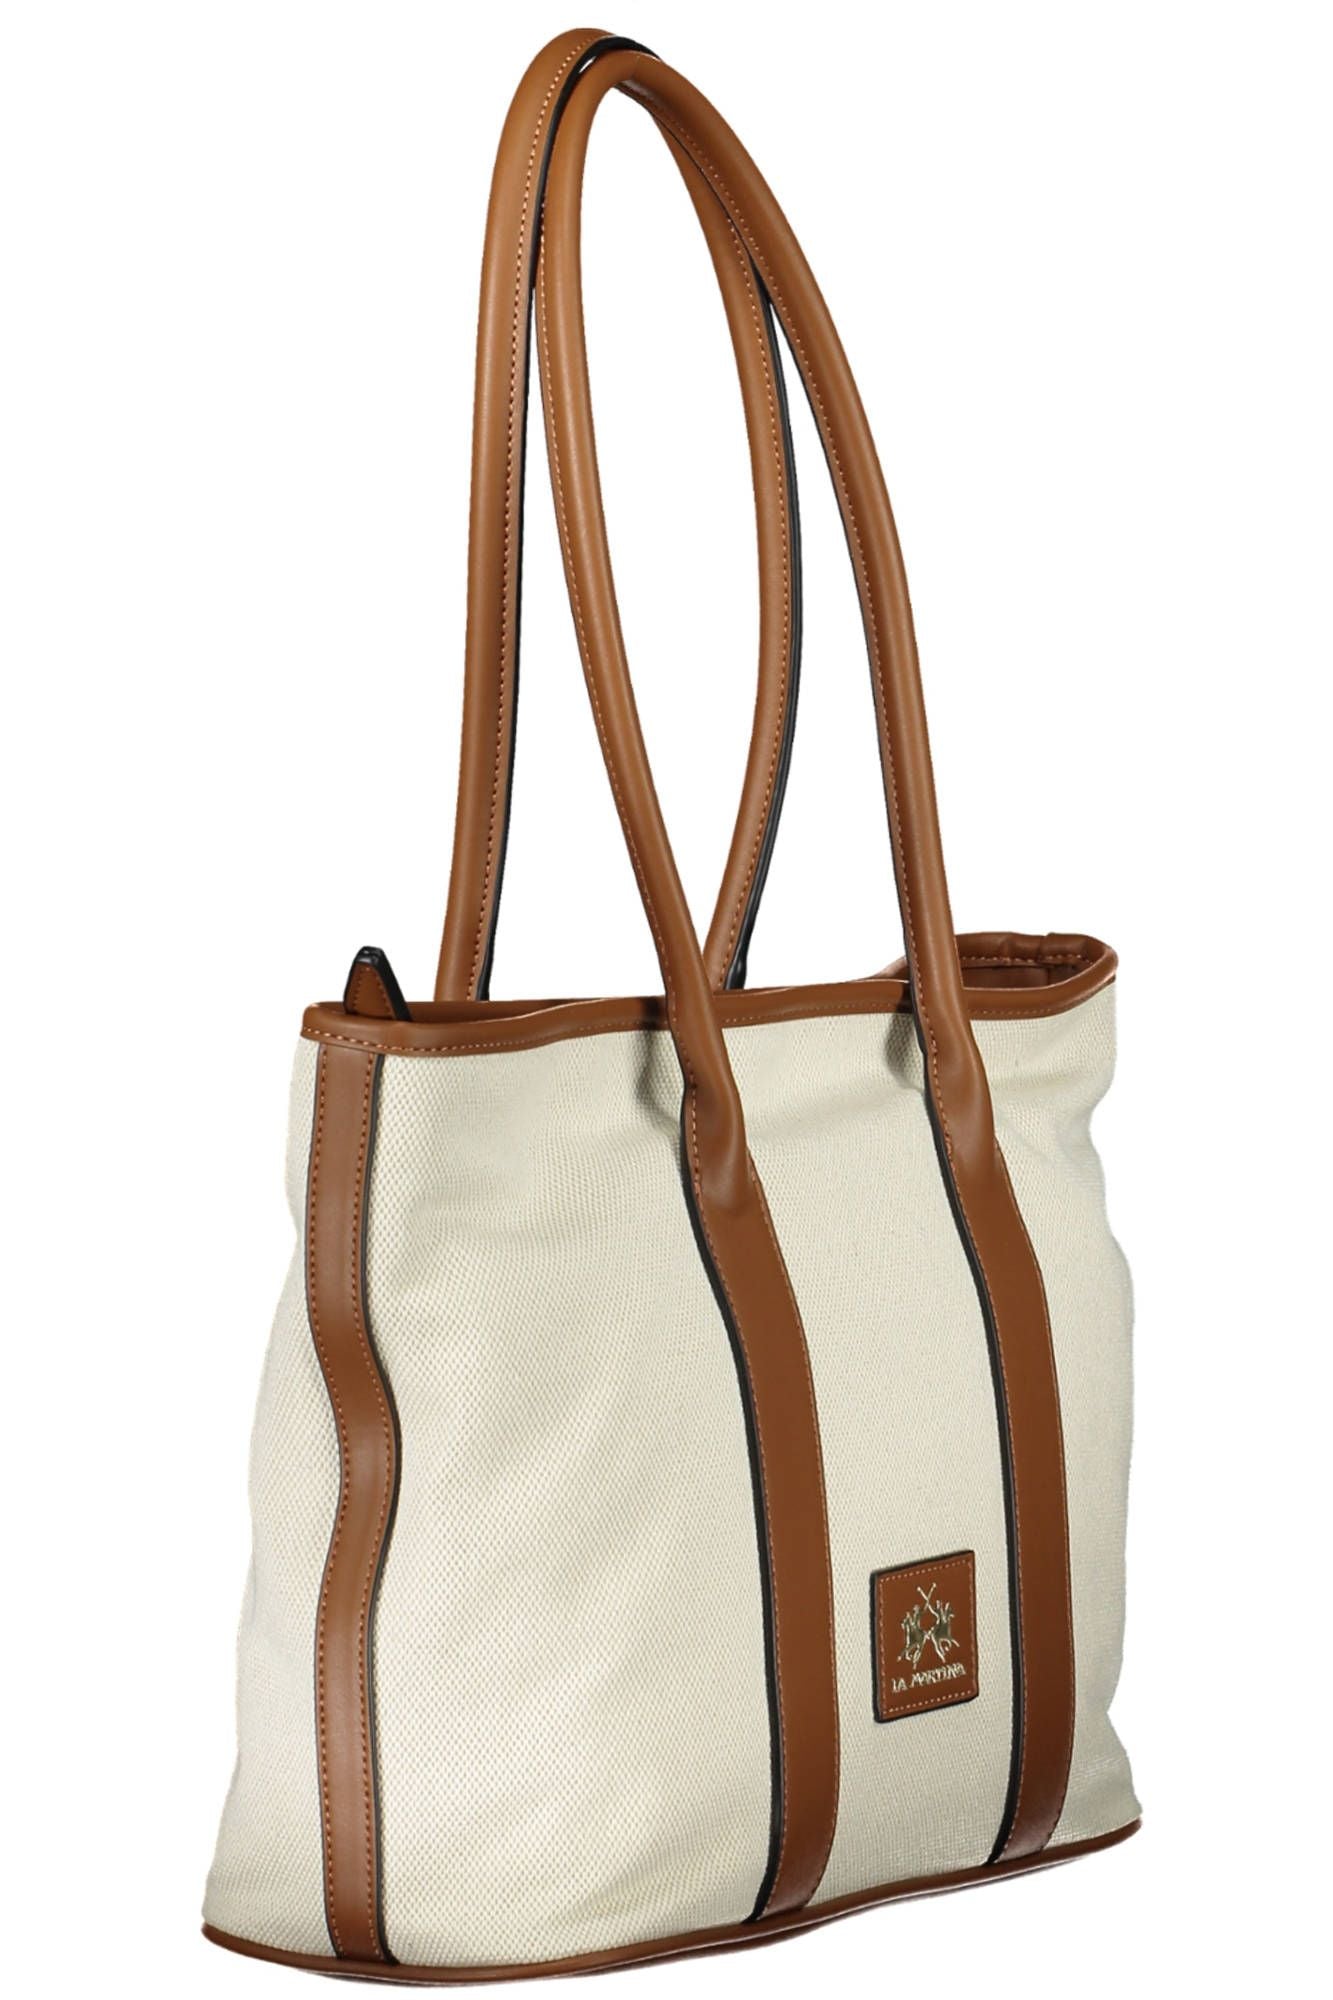 Chic Beige Cotton Shoulder Bag with Contrasting Details